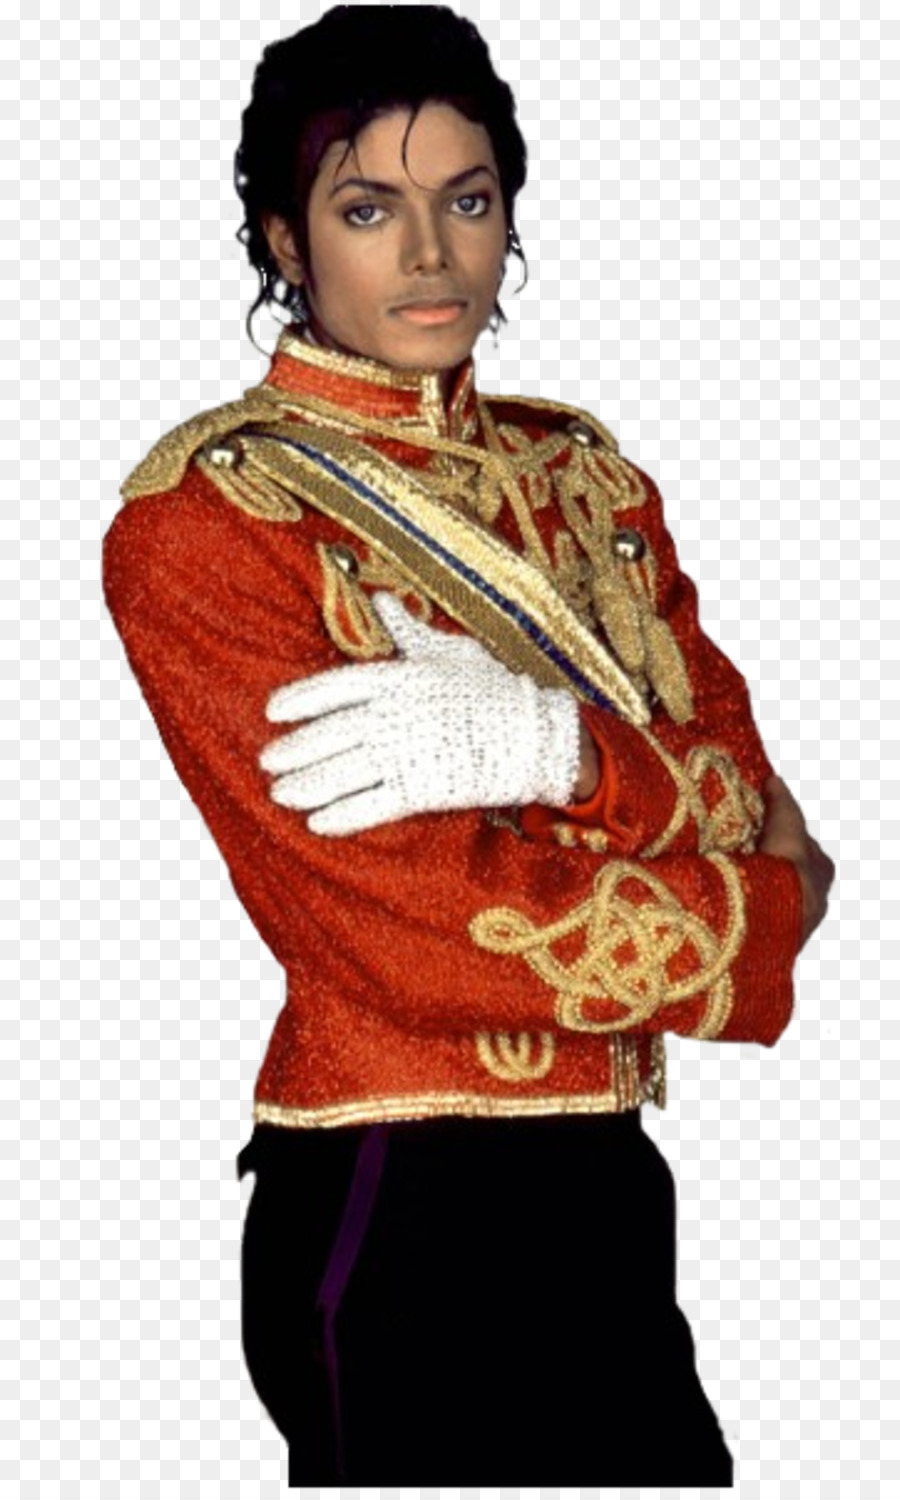 Michael Jackson King of Pop-Musiker - Michael Jackson